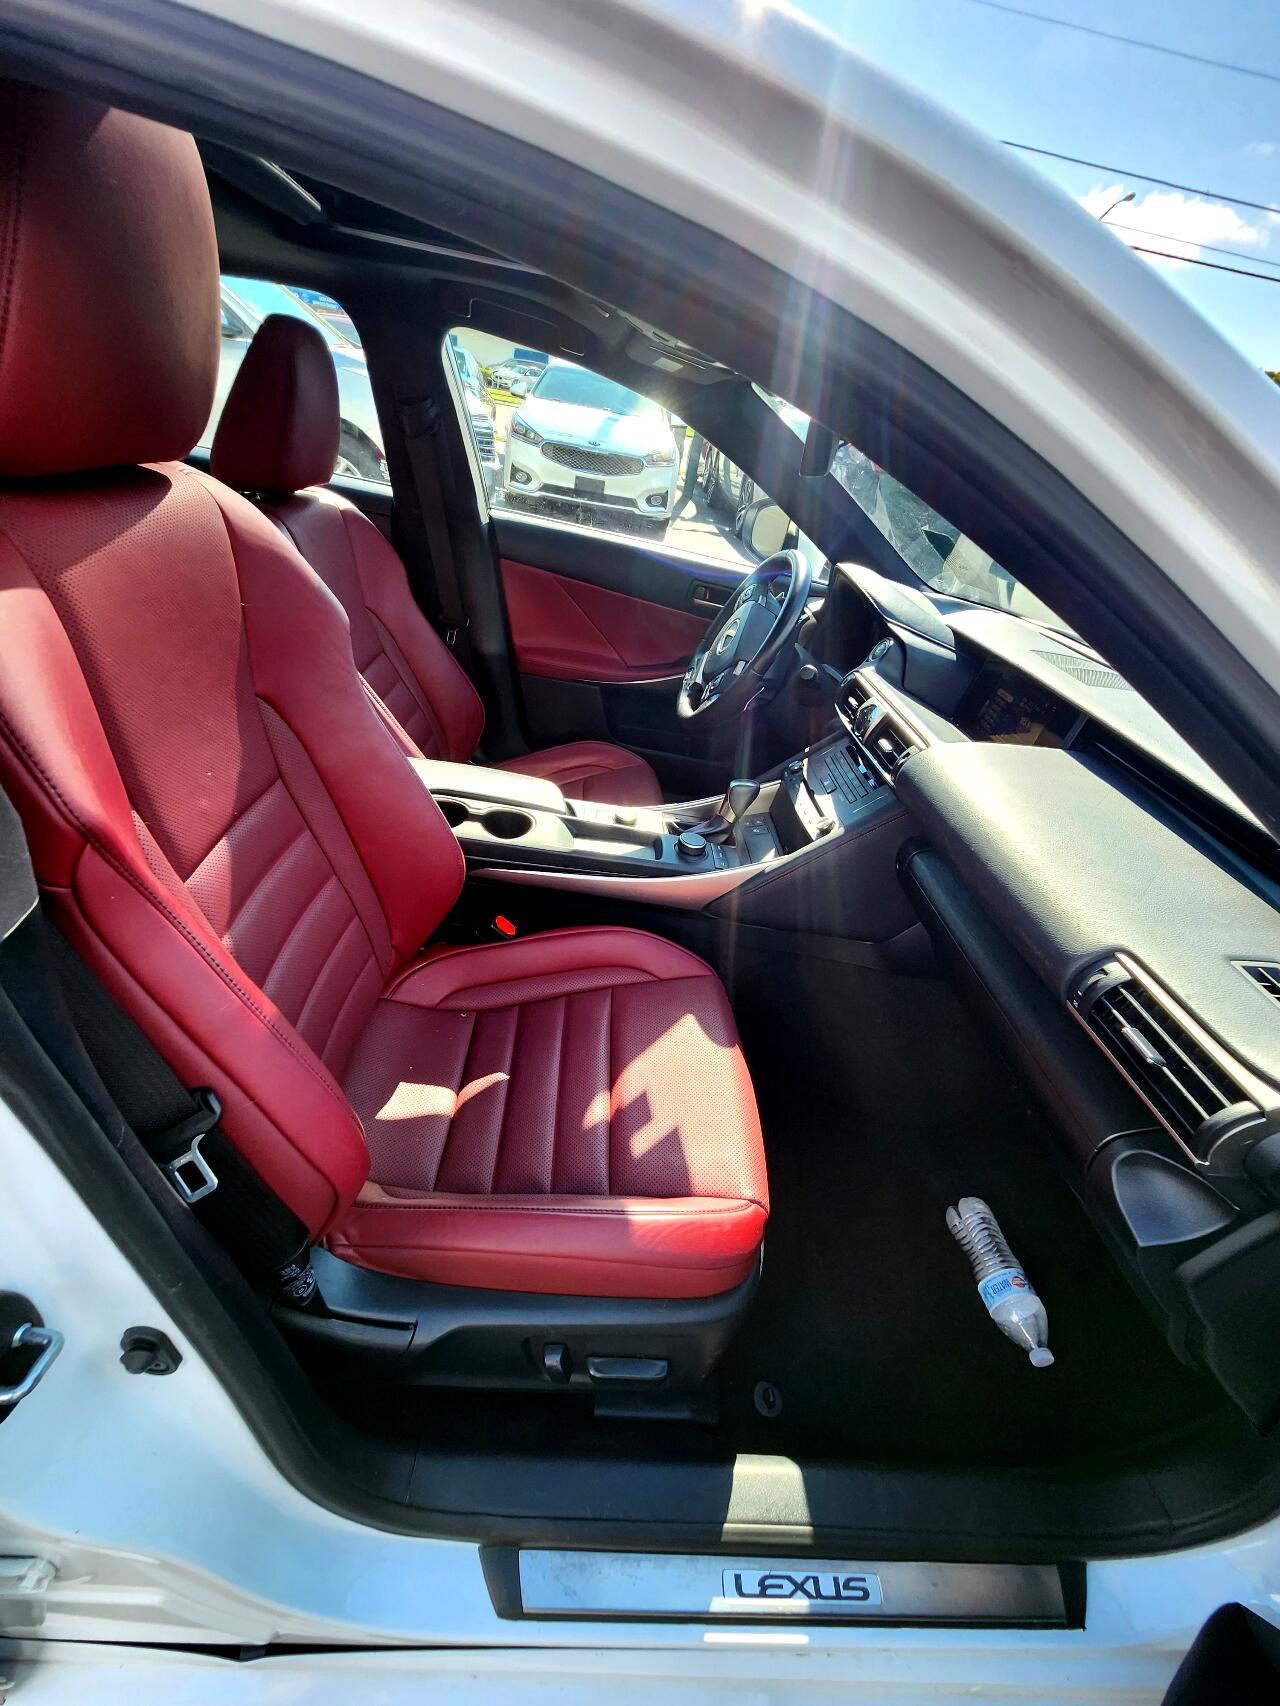 2020 LEXUS IS Sedan - $28,999